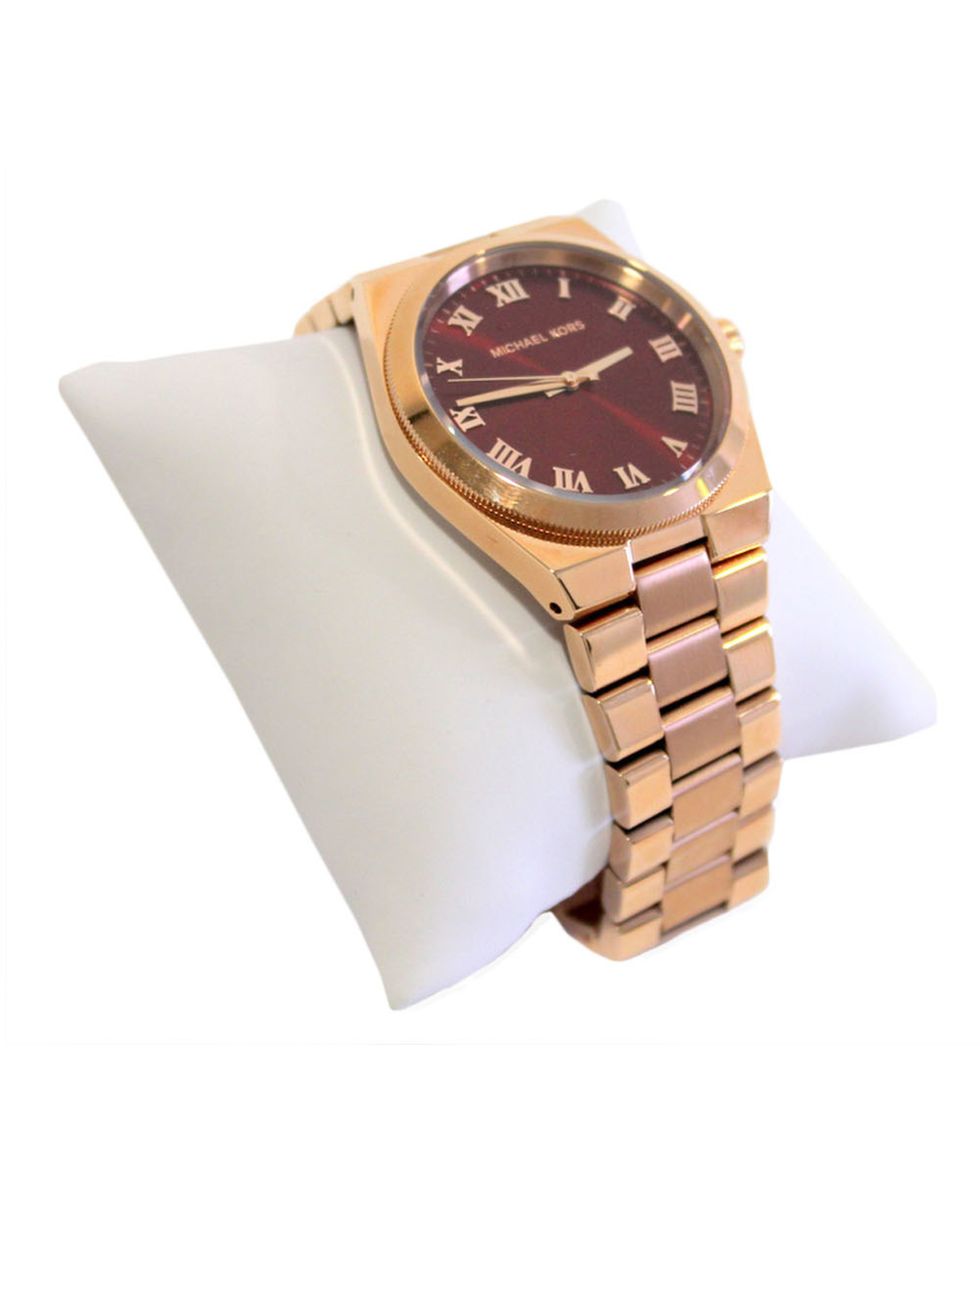 Analog watch, Product, Brown, Watch, Fashion accessory, Watch accessory, Khaki, Tan, Clock, Metal, 